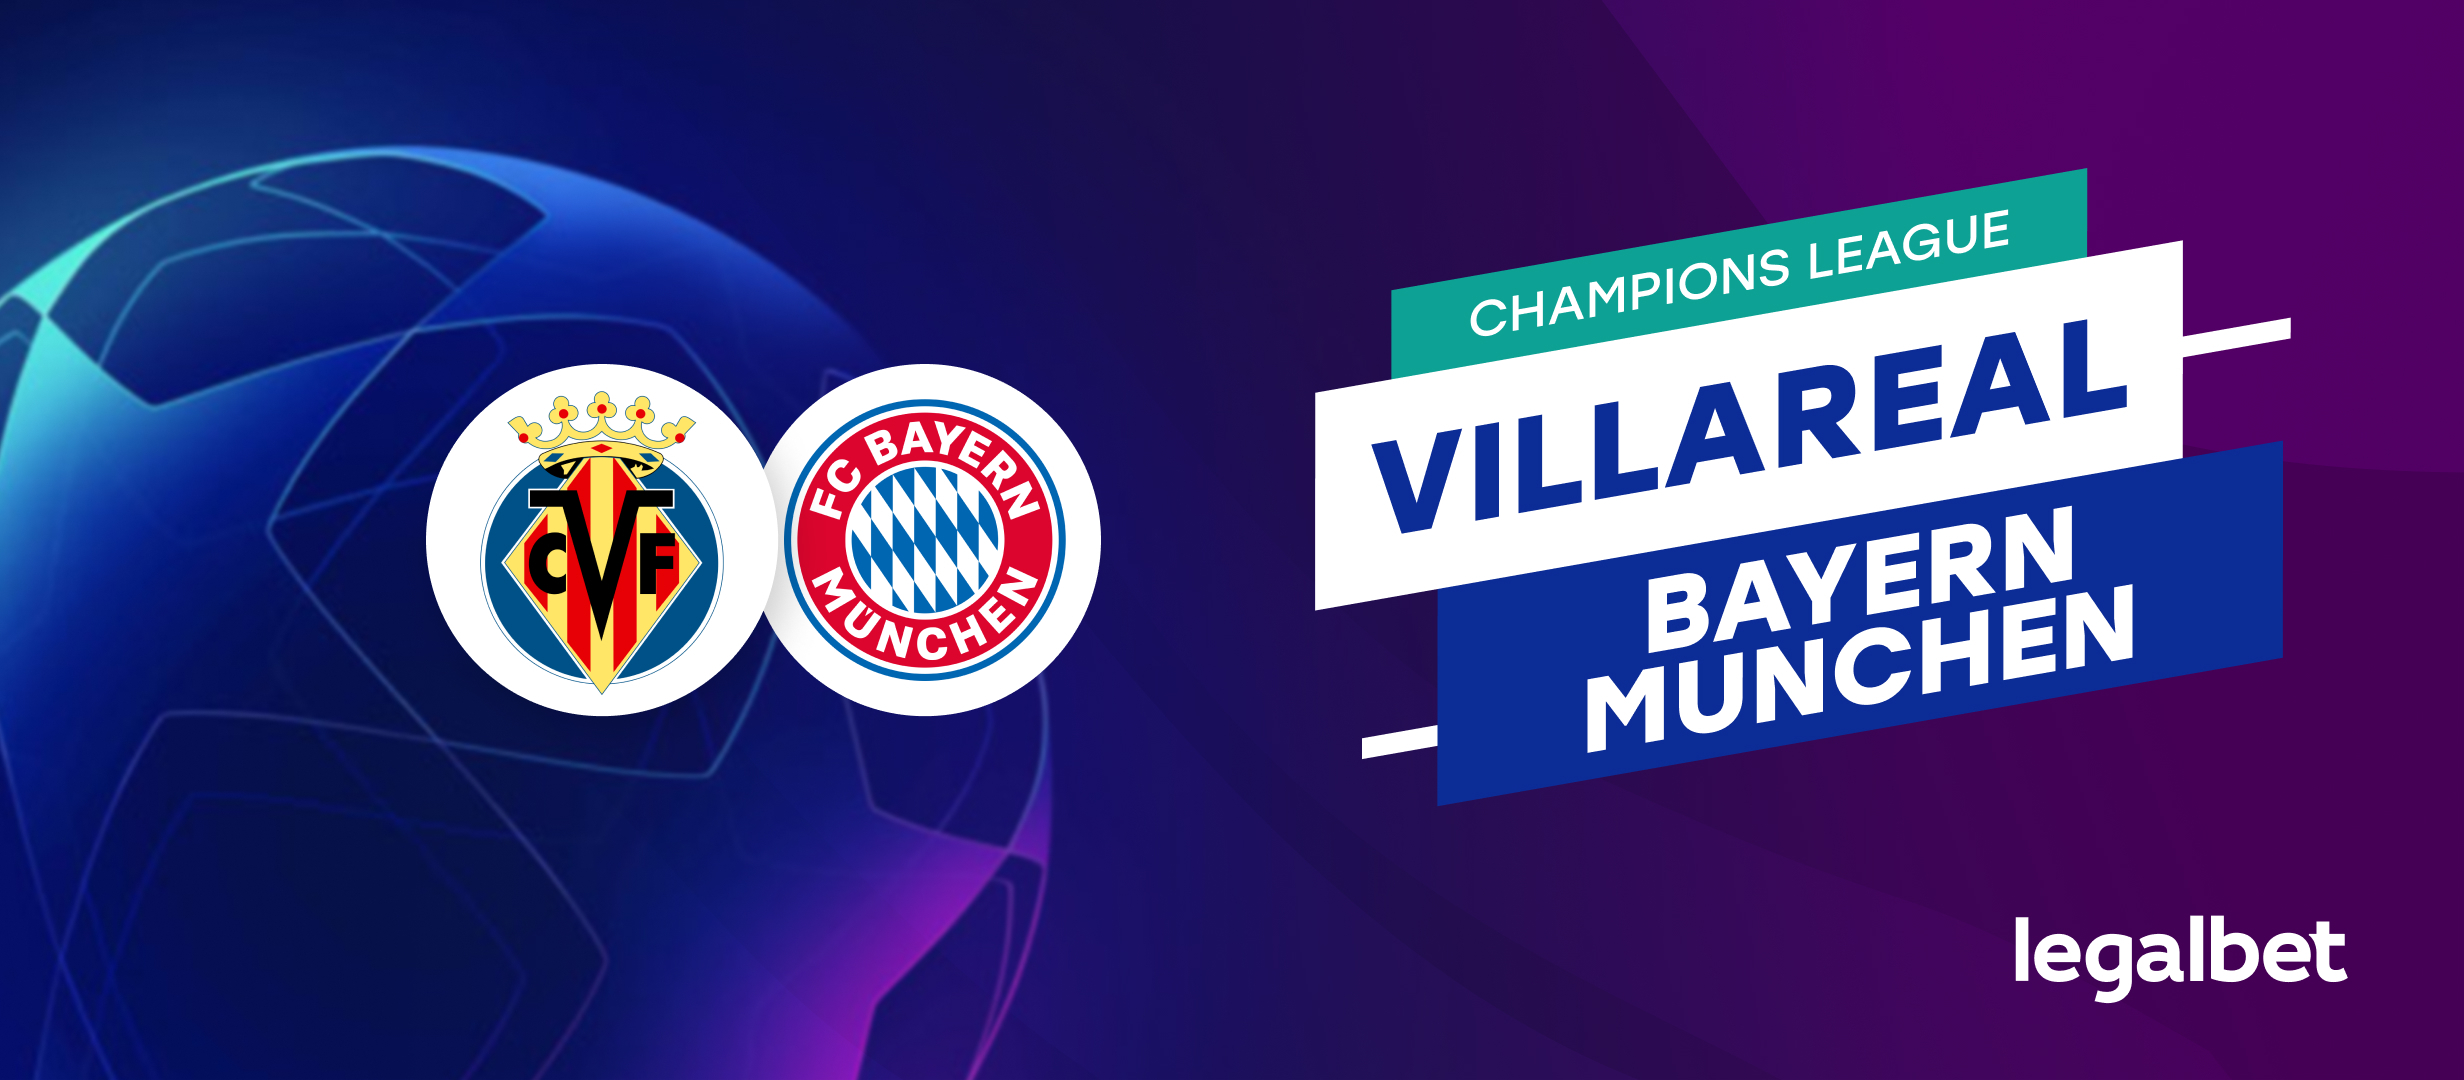 Pariuri si cote pentru Villarreal vs Bayern Munchen